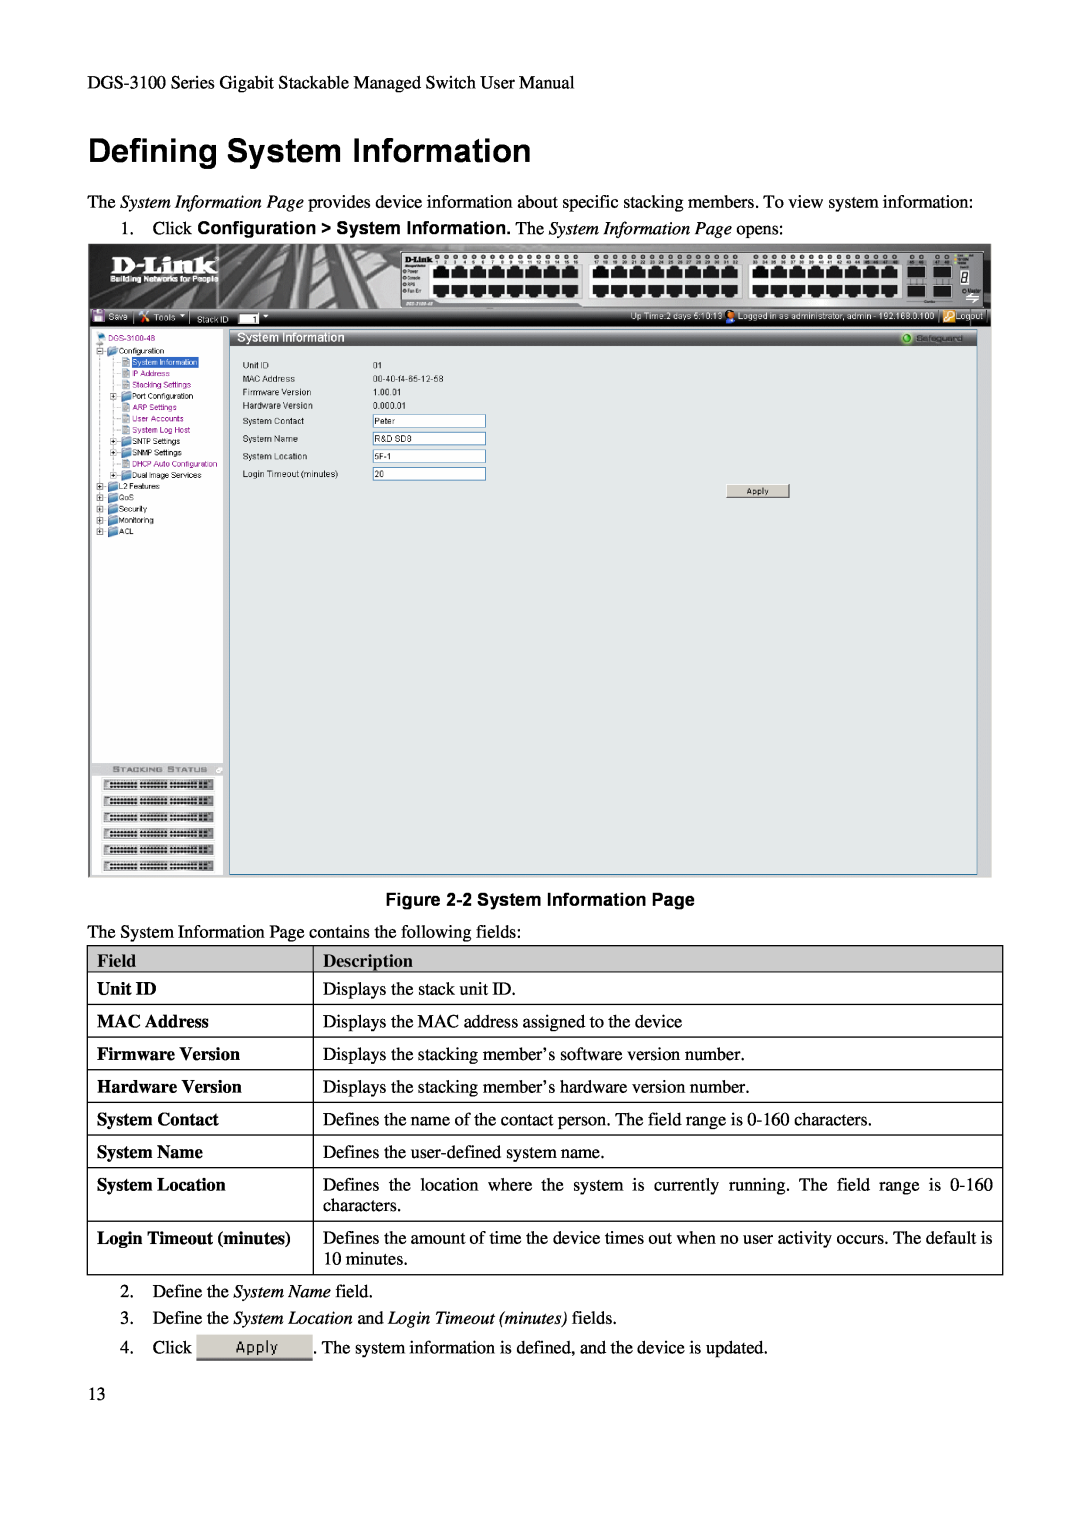 D-Link DGS-3100 user manual Defining System Information, 2 System Information Page, Description 